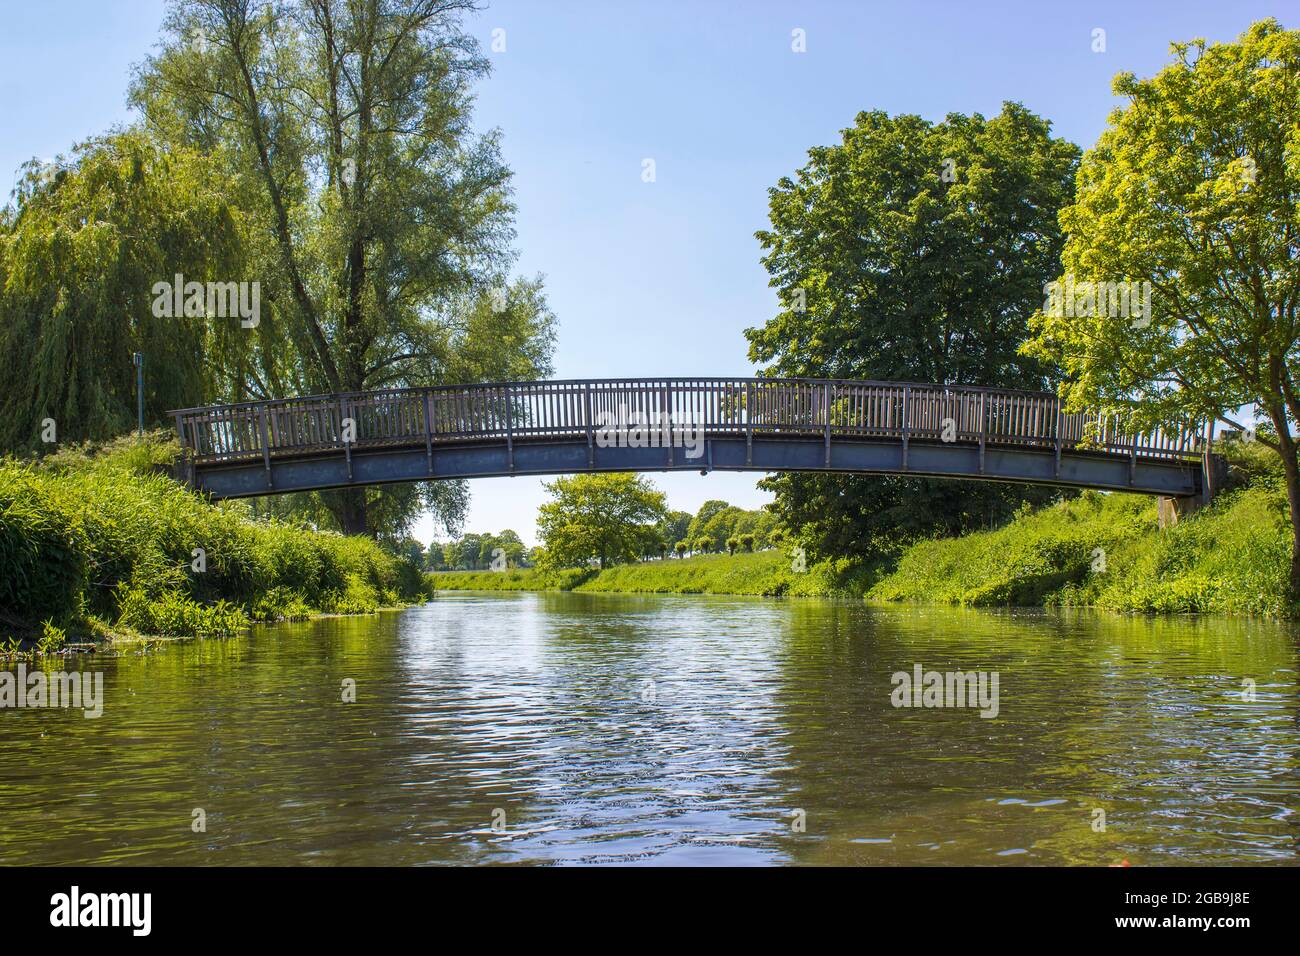 brigde on Niers River, Lower Rhine Region, Germany Stock Photo